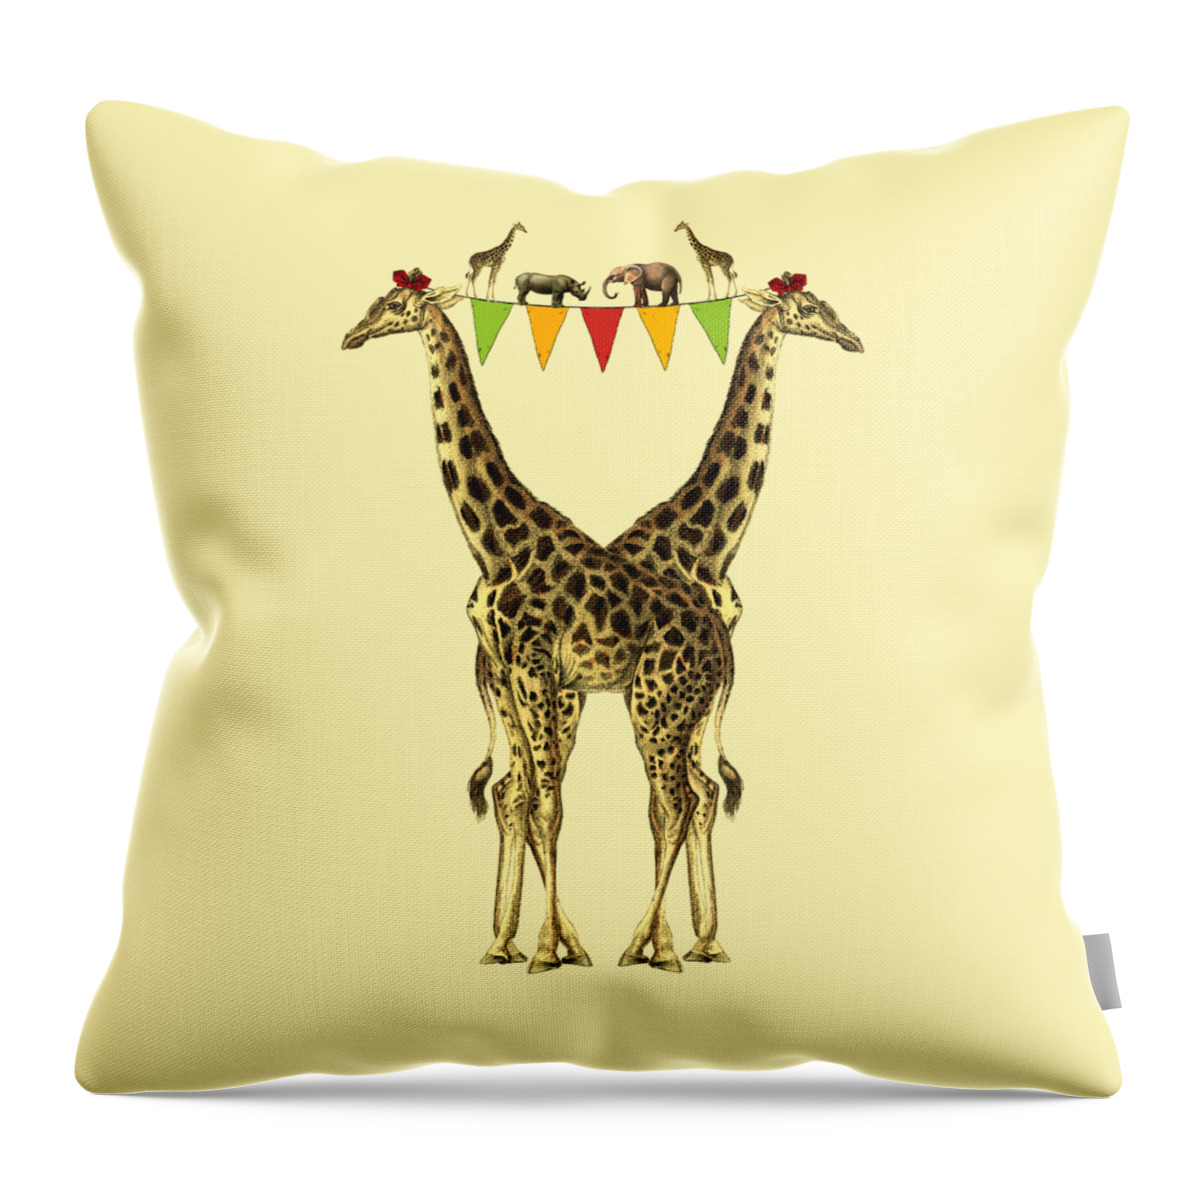 Giraffe Throw Pillow featuring the digital art Party Theme Giraffes by Madame Memento